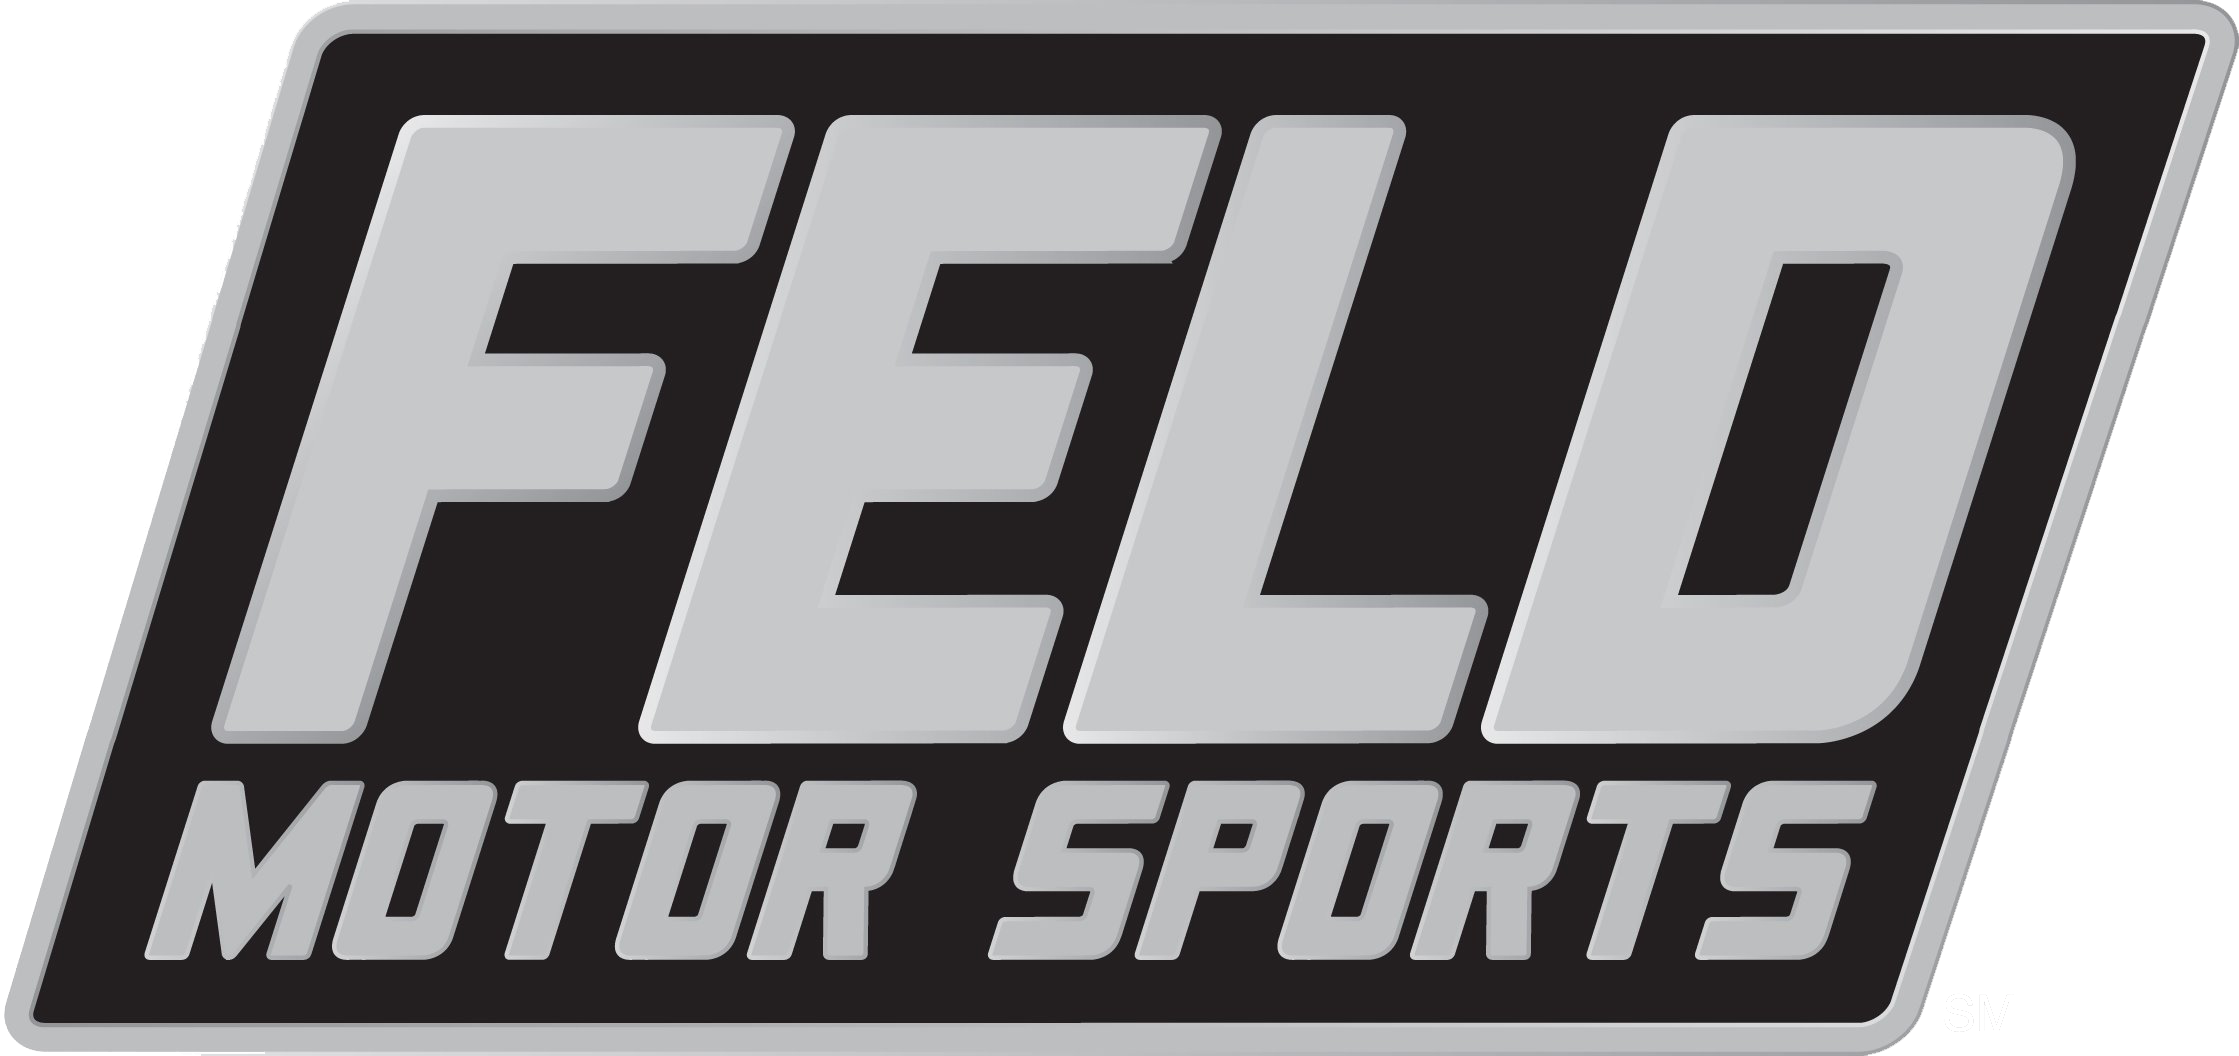 Feld Motor Sports.png